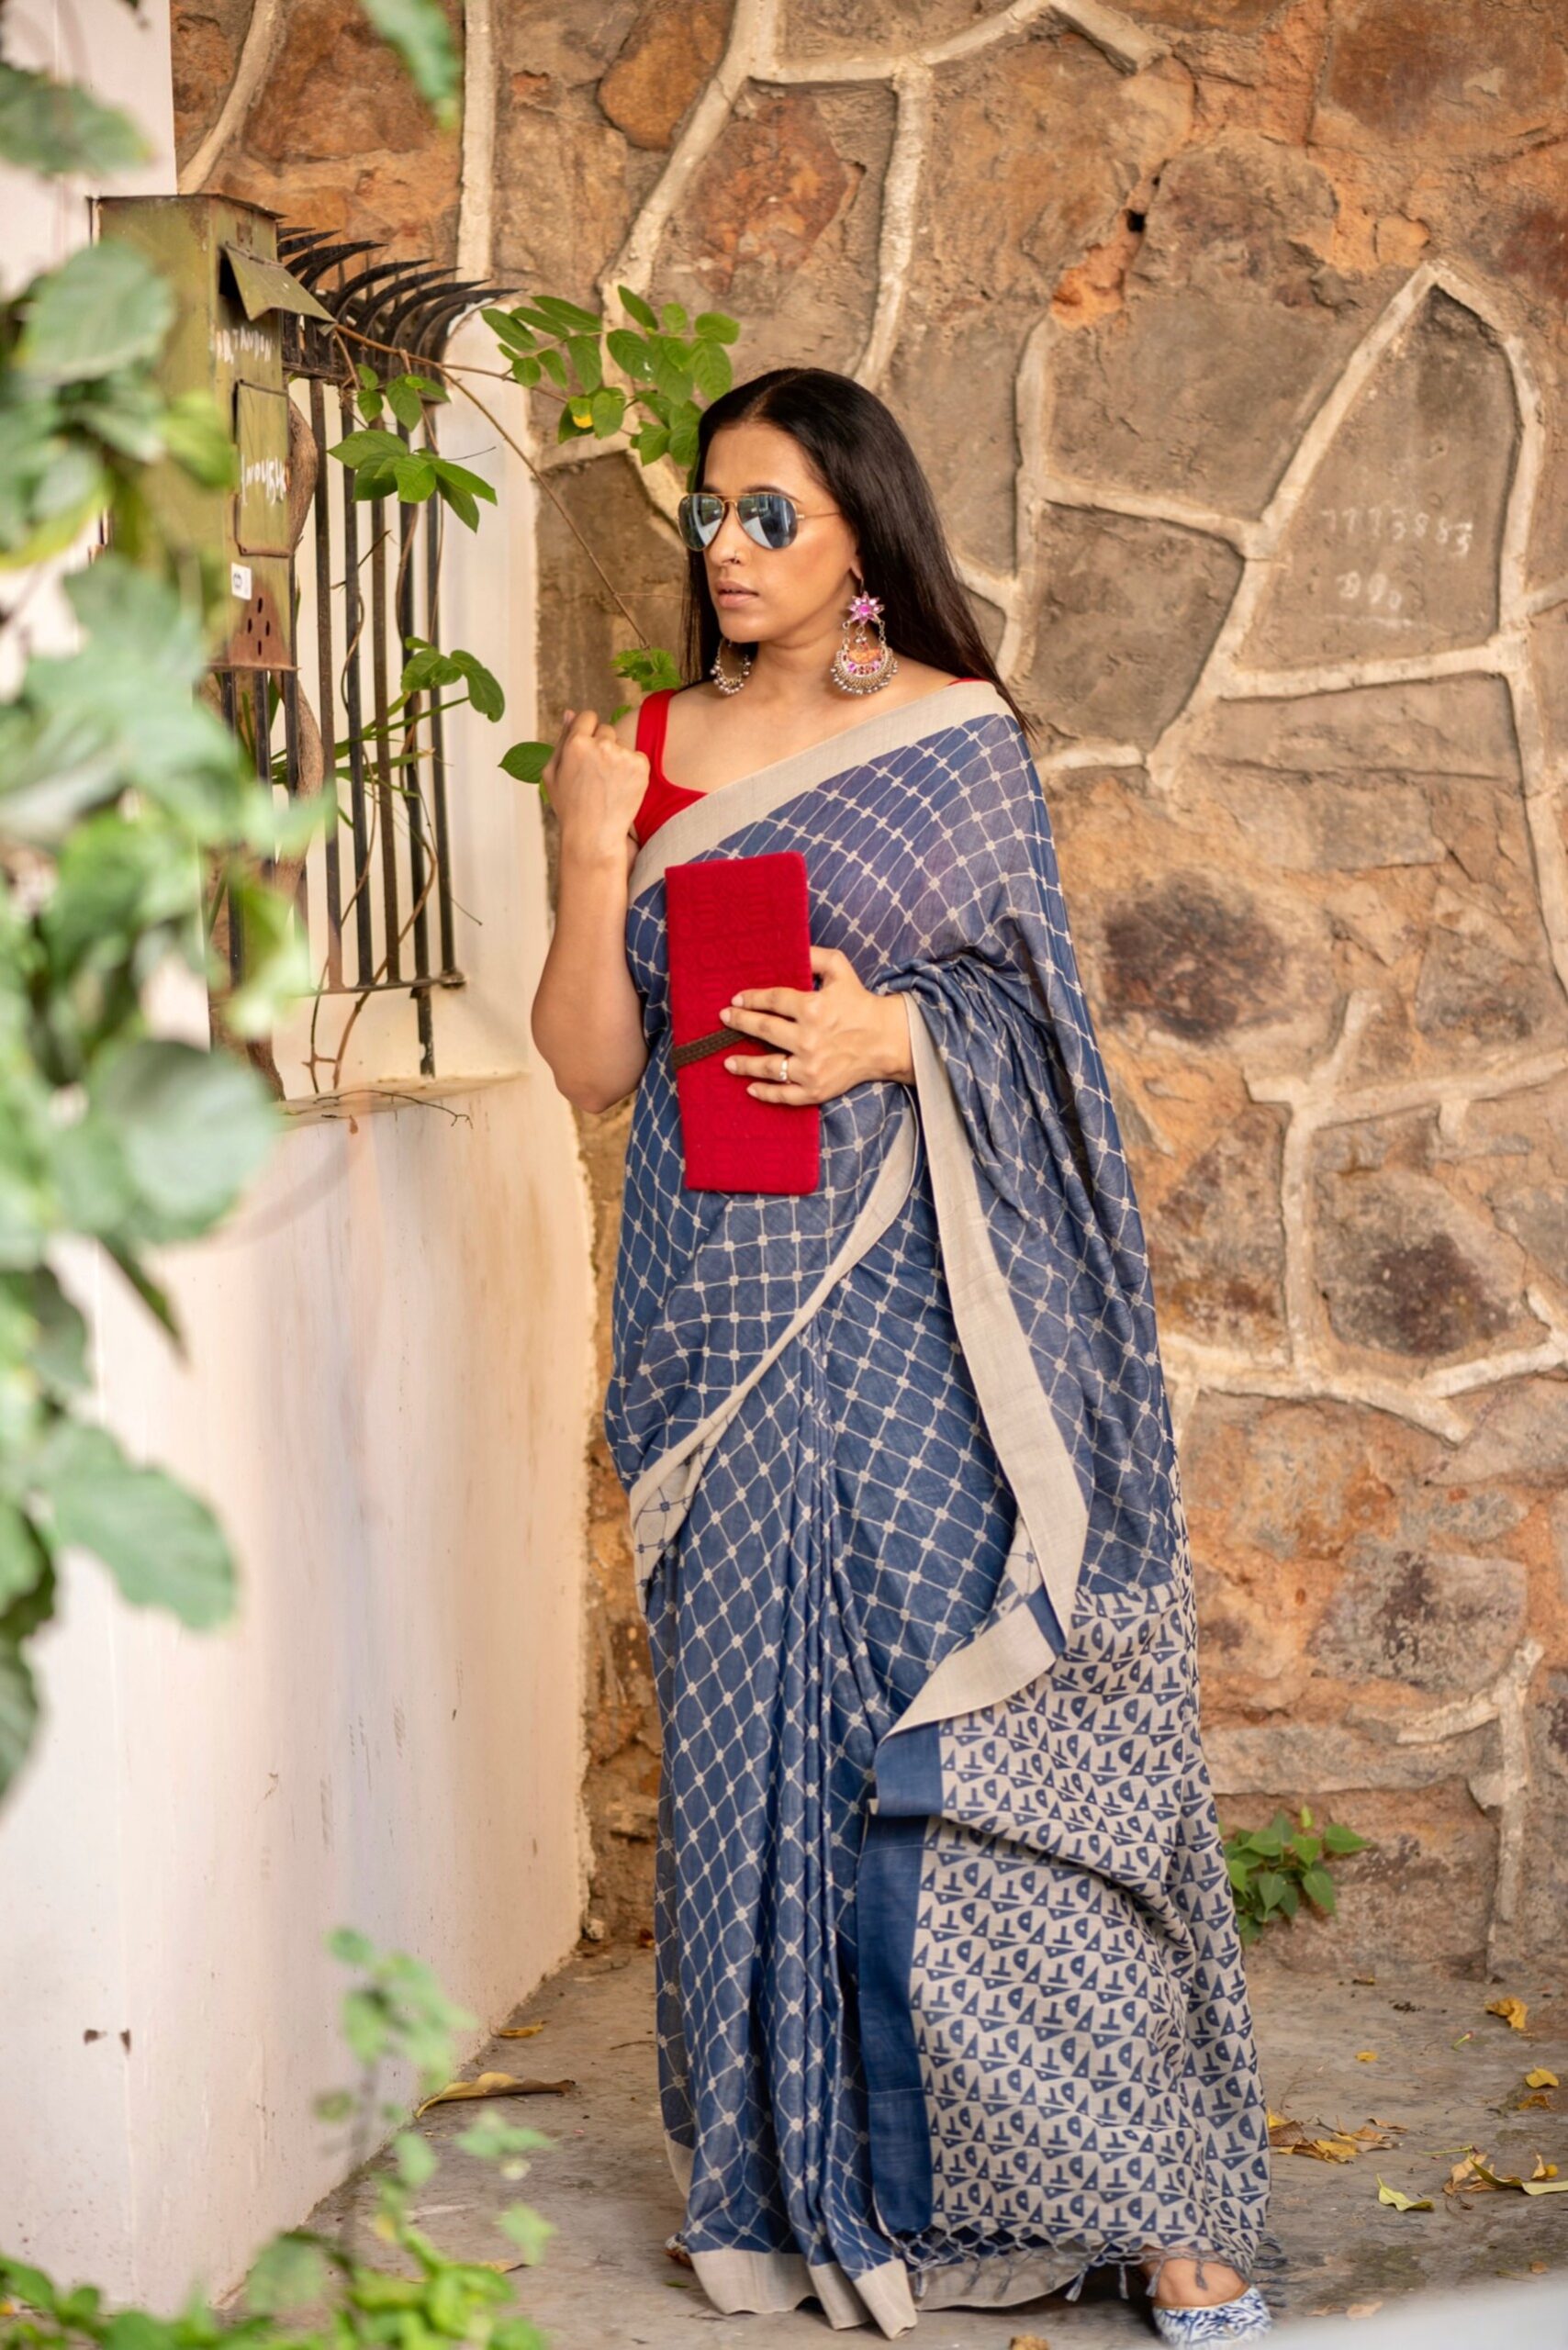 Khadi Cotton Sari - Stunning conbination of steel blue and beige